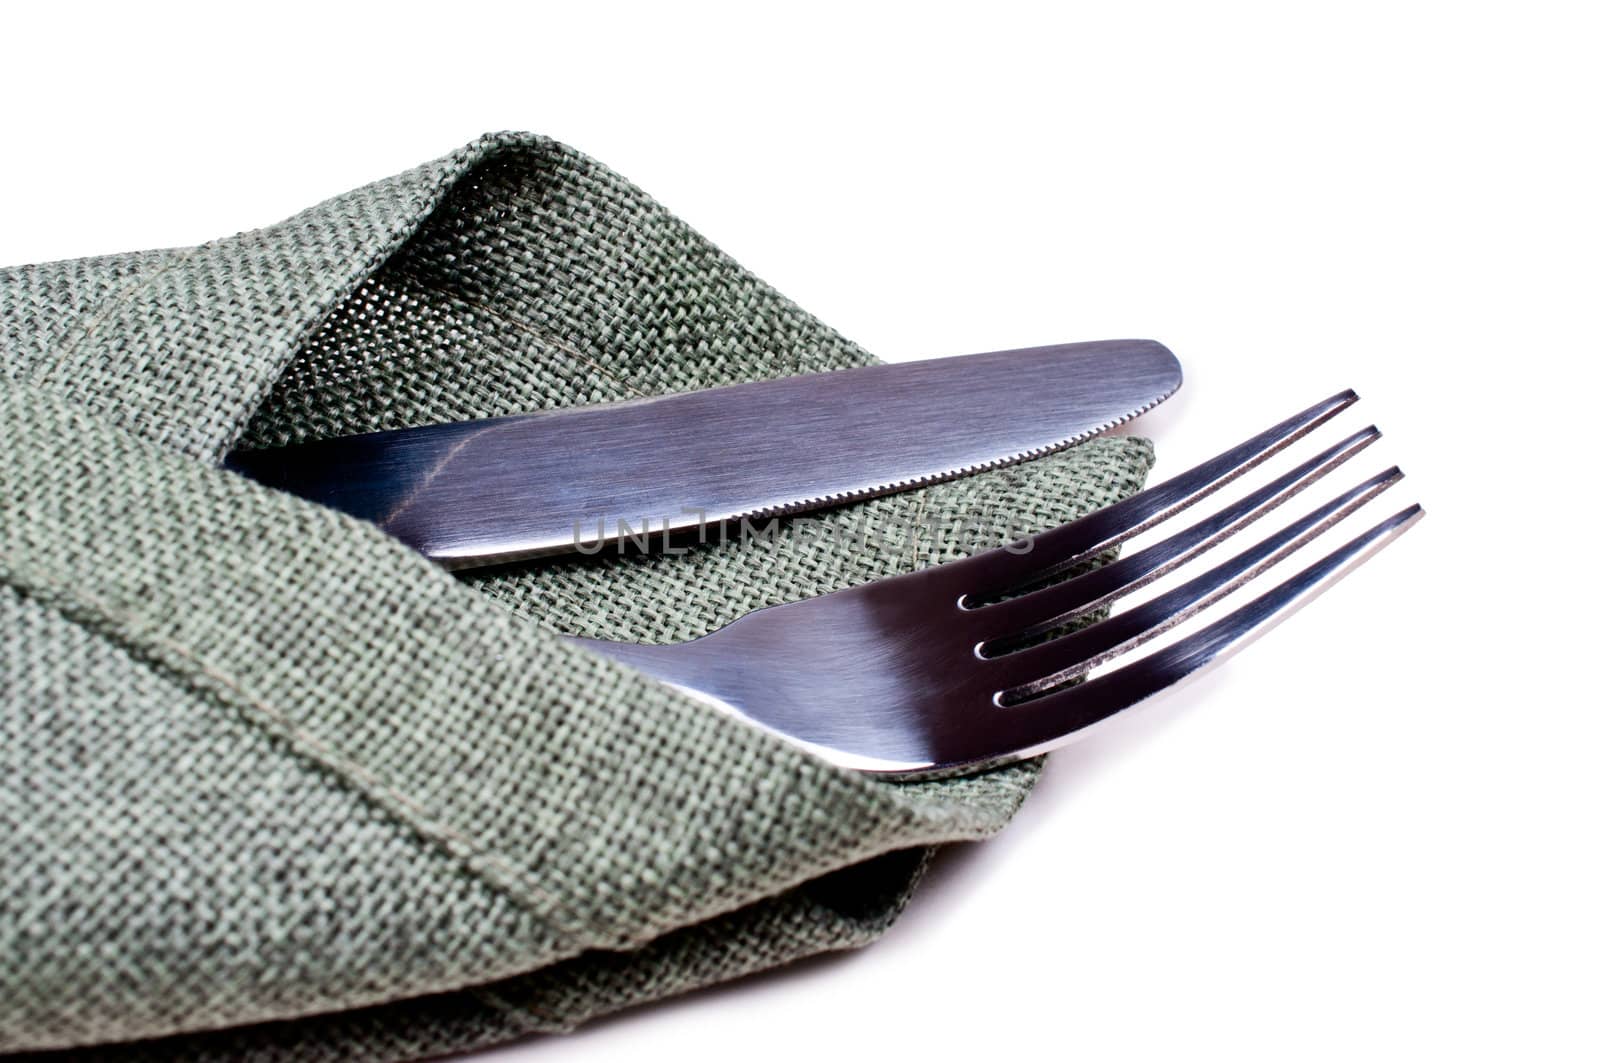 Knife and fork on green napkin close up by Nanisimova